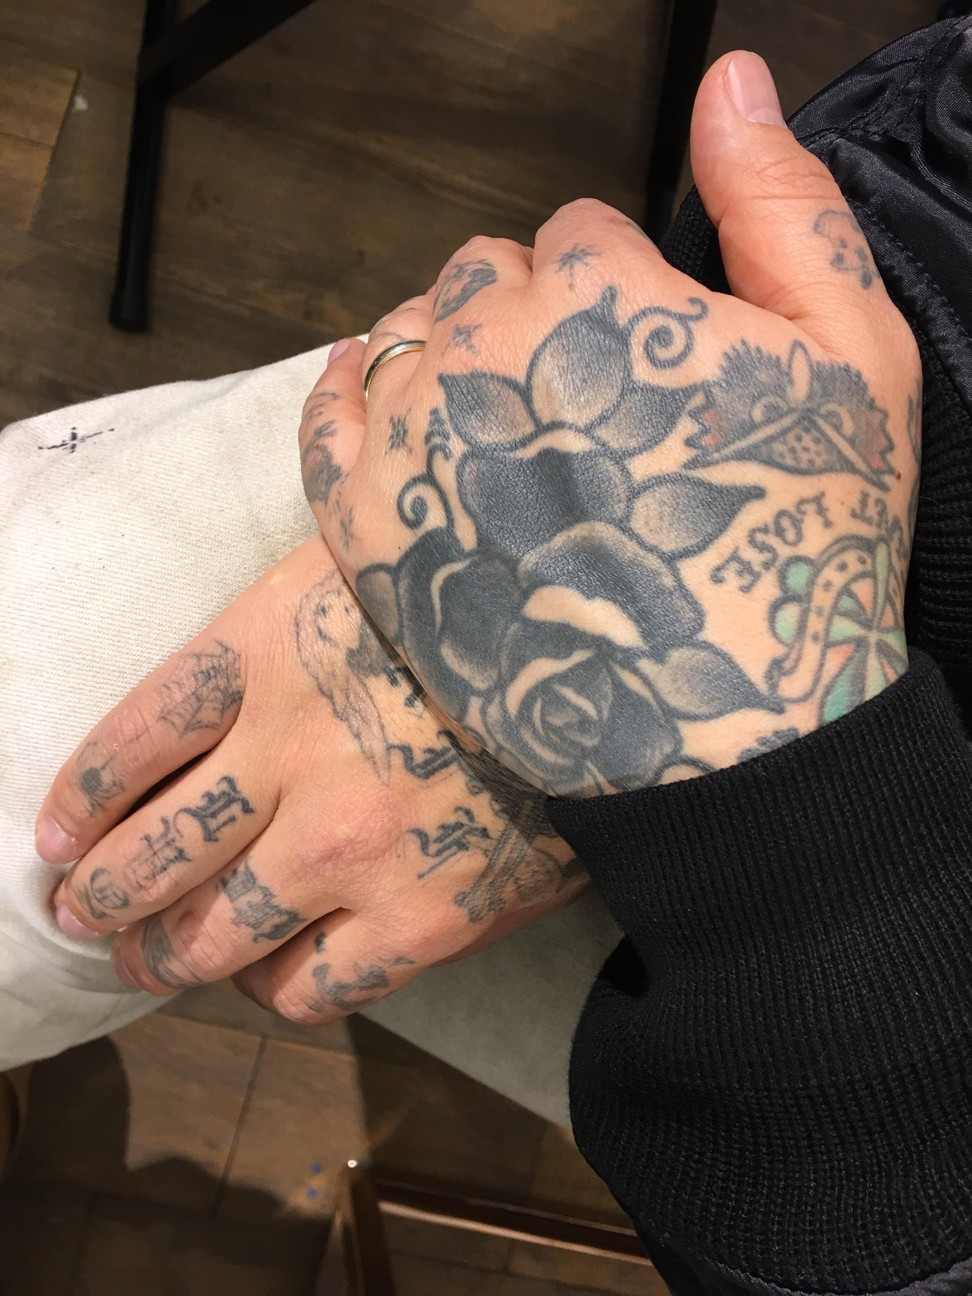 Woo’s tattooed hands. Photo: Kylie Knott